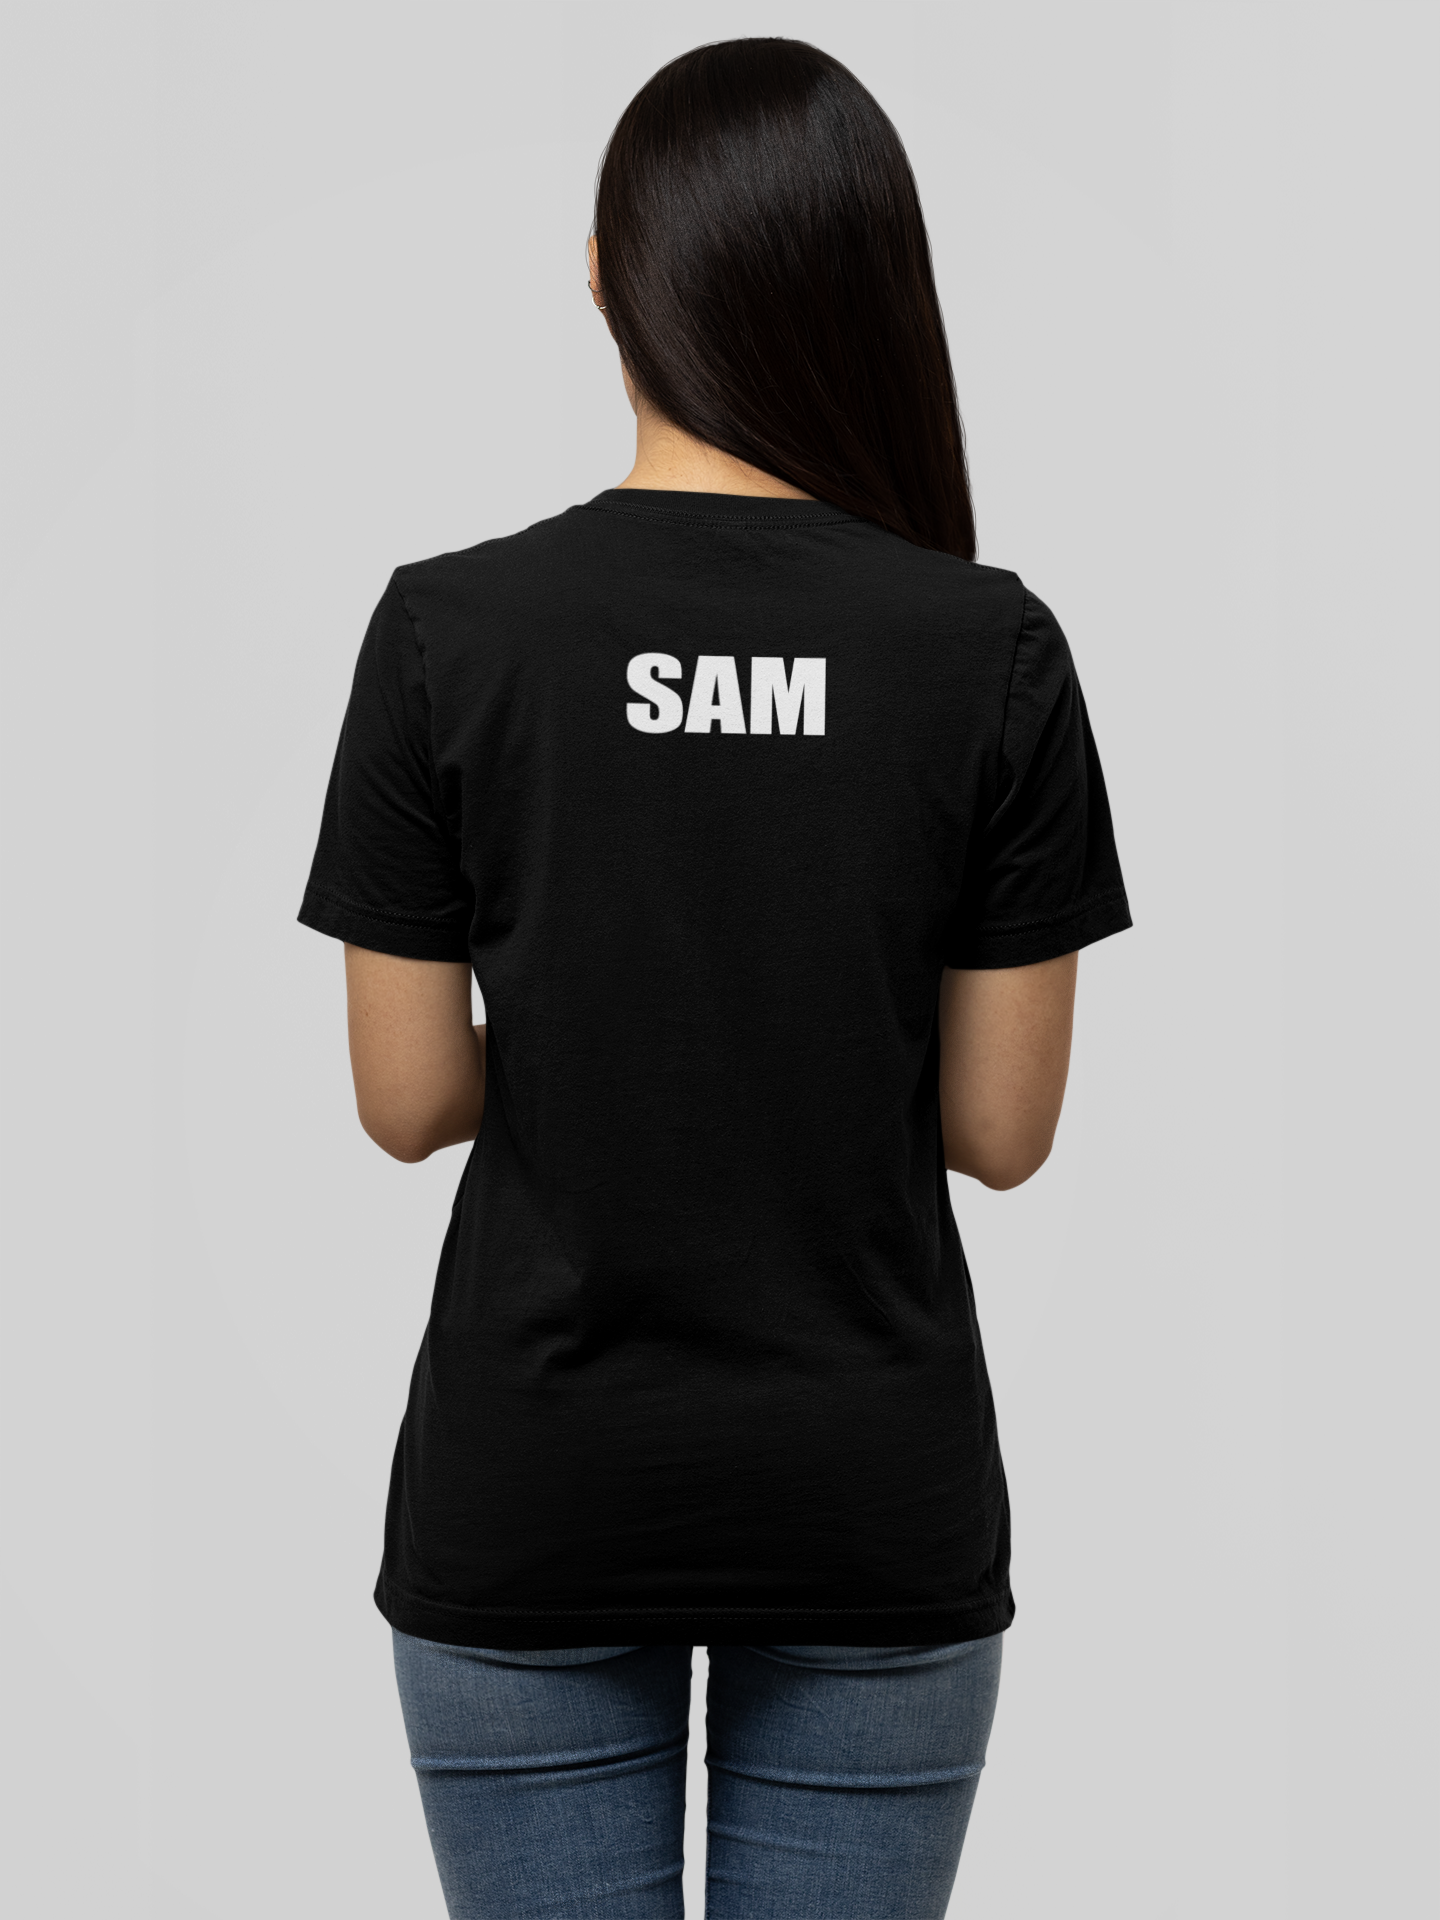 Beyond Best - Women's T-Shirt - Chest Print Front / SAM Print Back